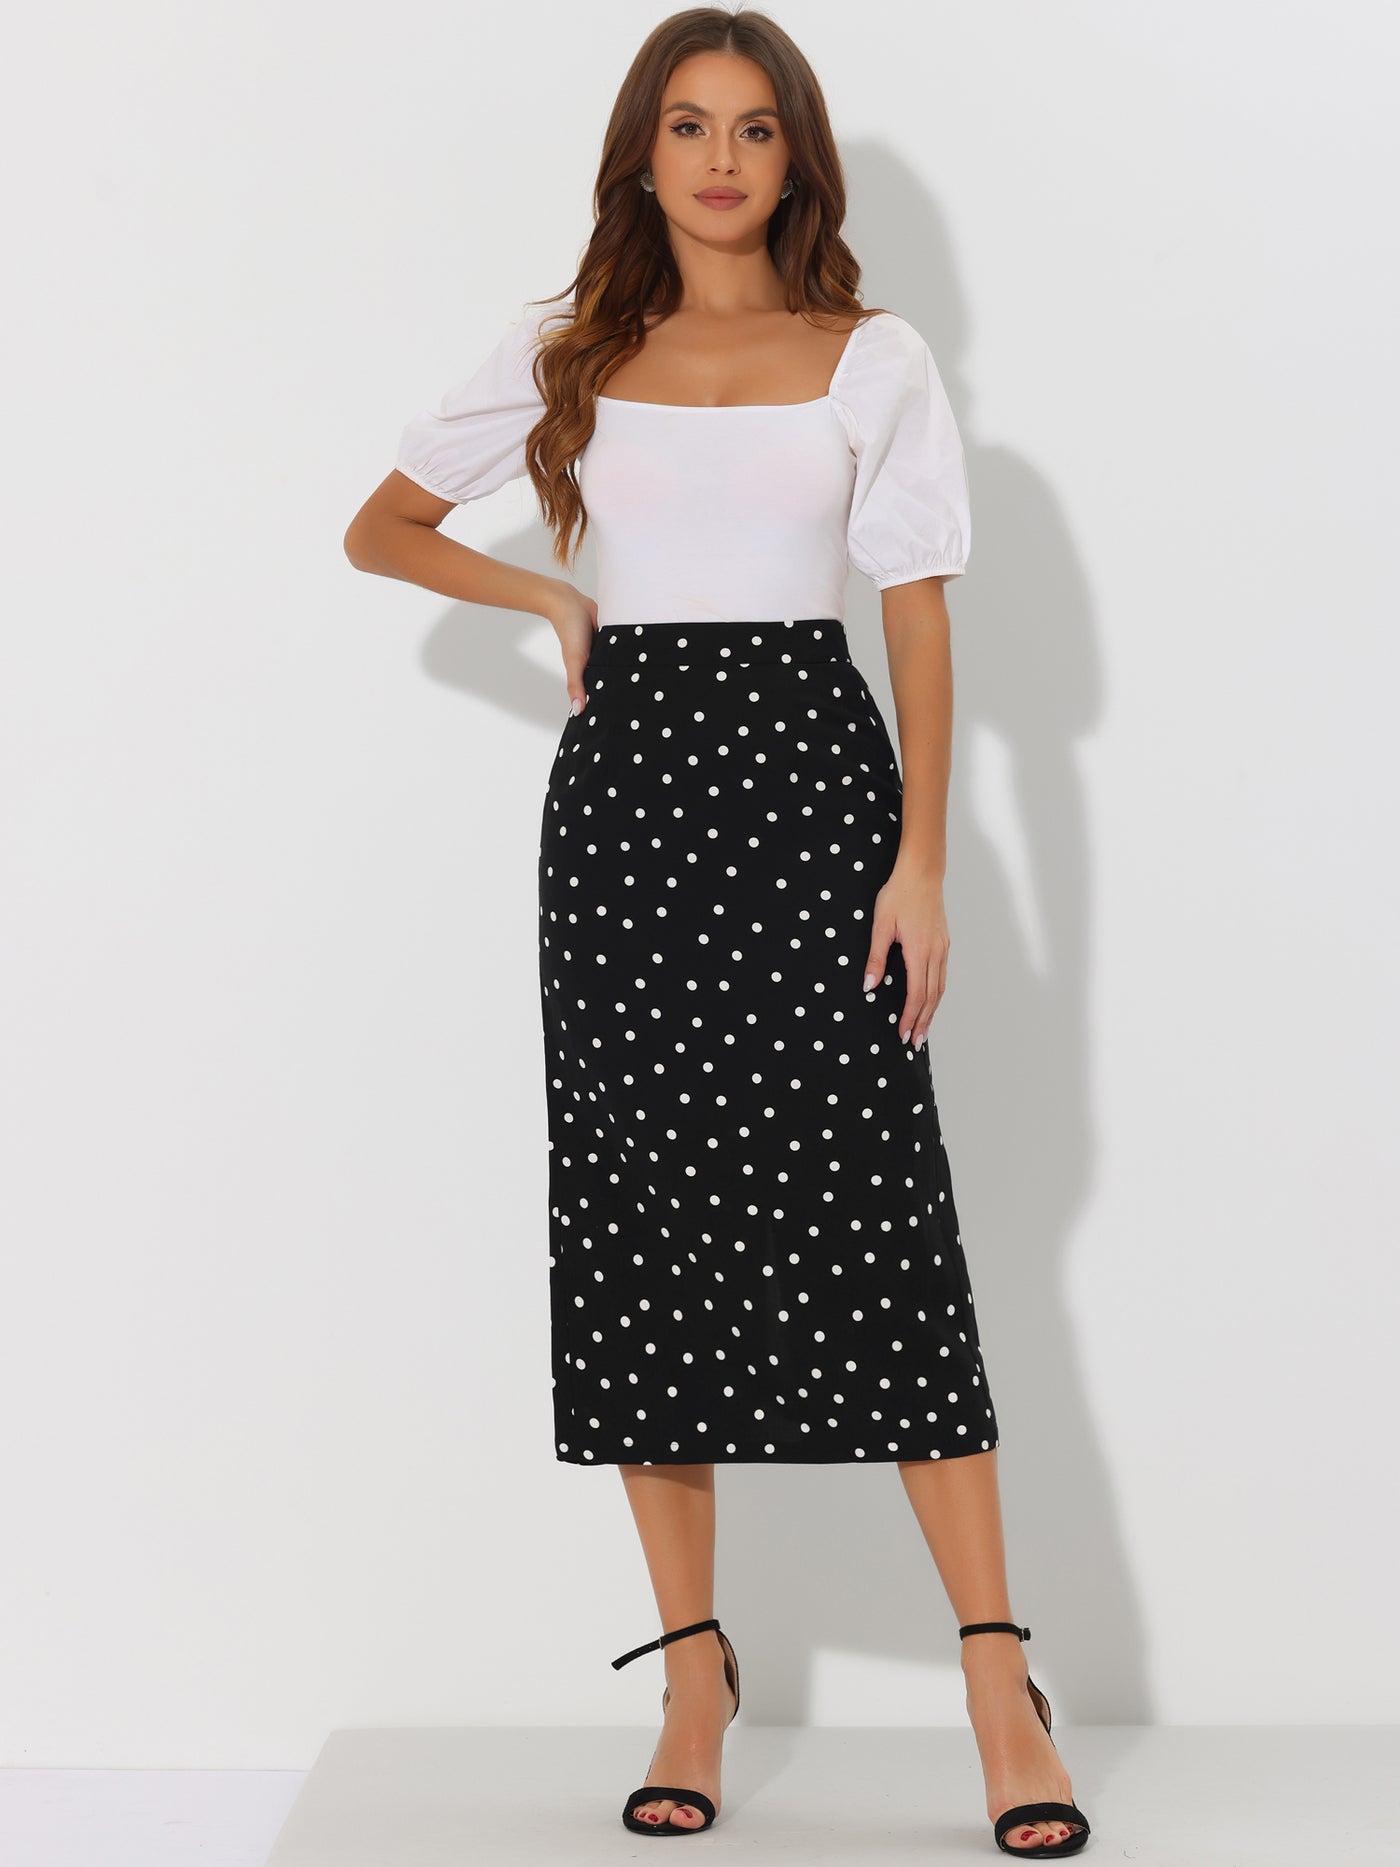 Allegra K Women's Summer Polka Dots Skirt Casual Elastic High Waisted Pencil Midi Skirt